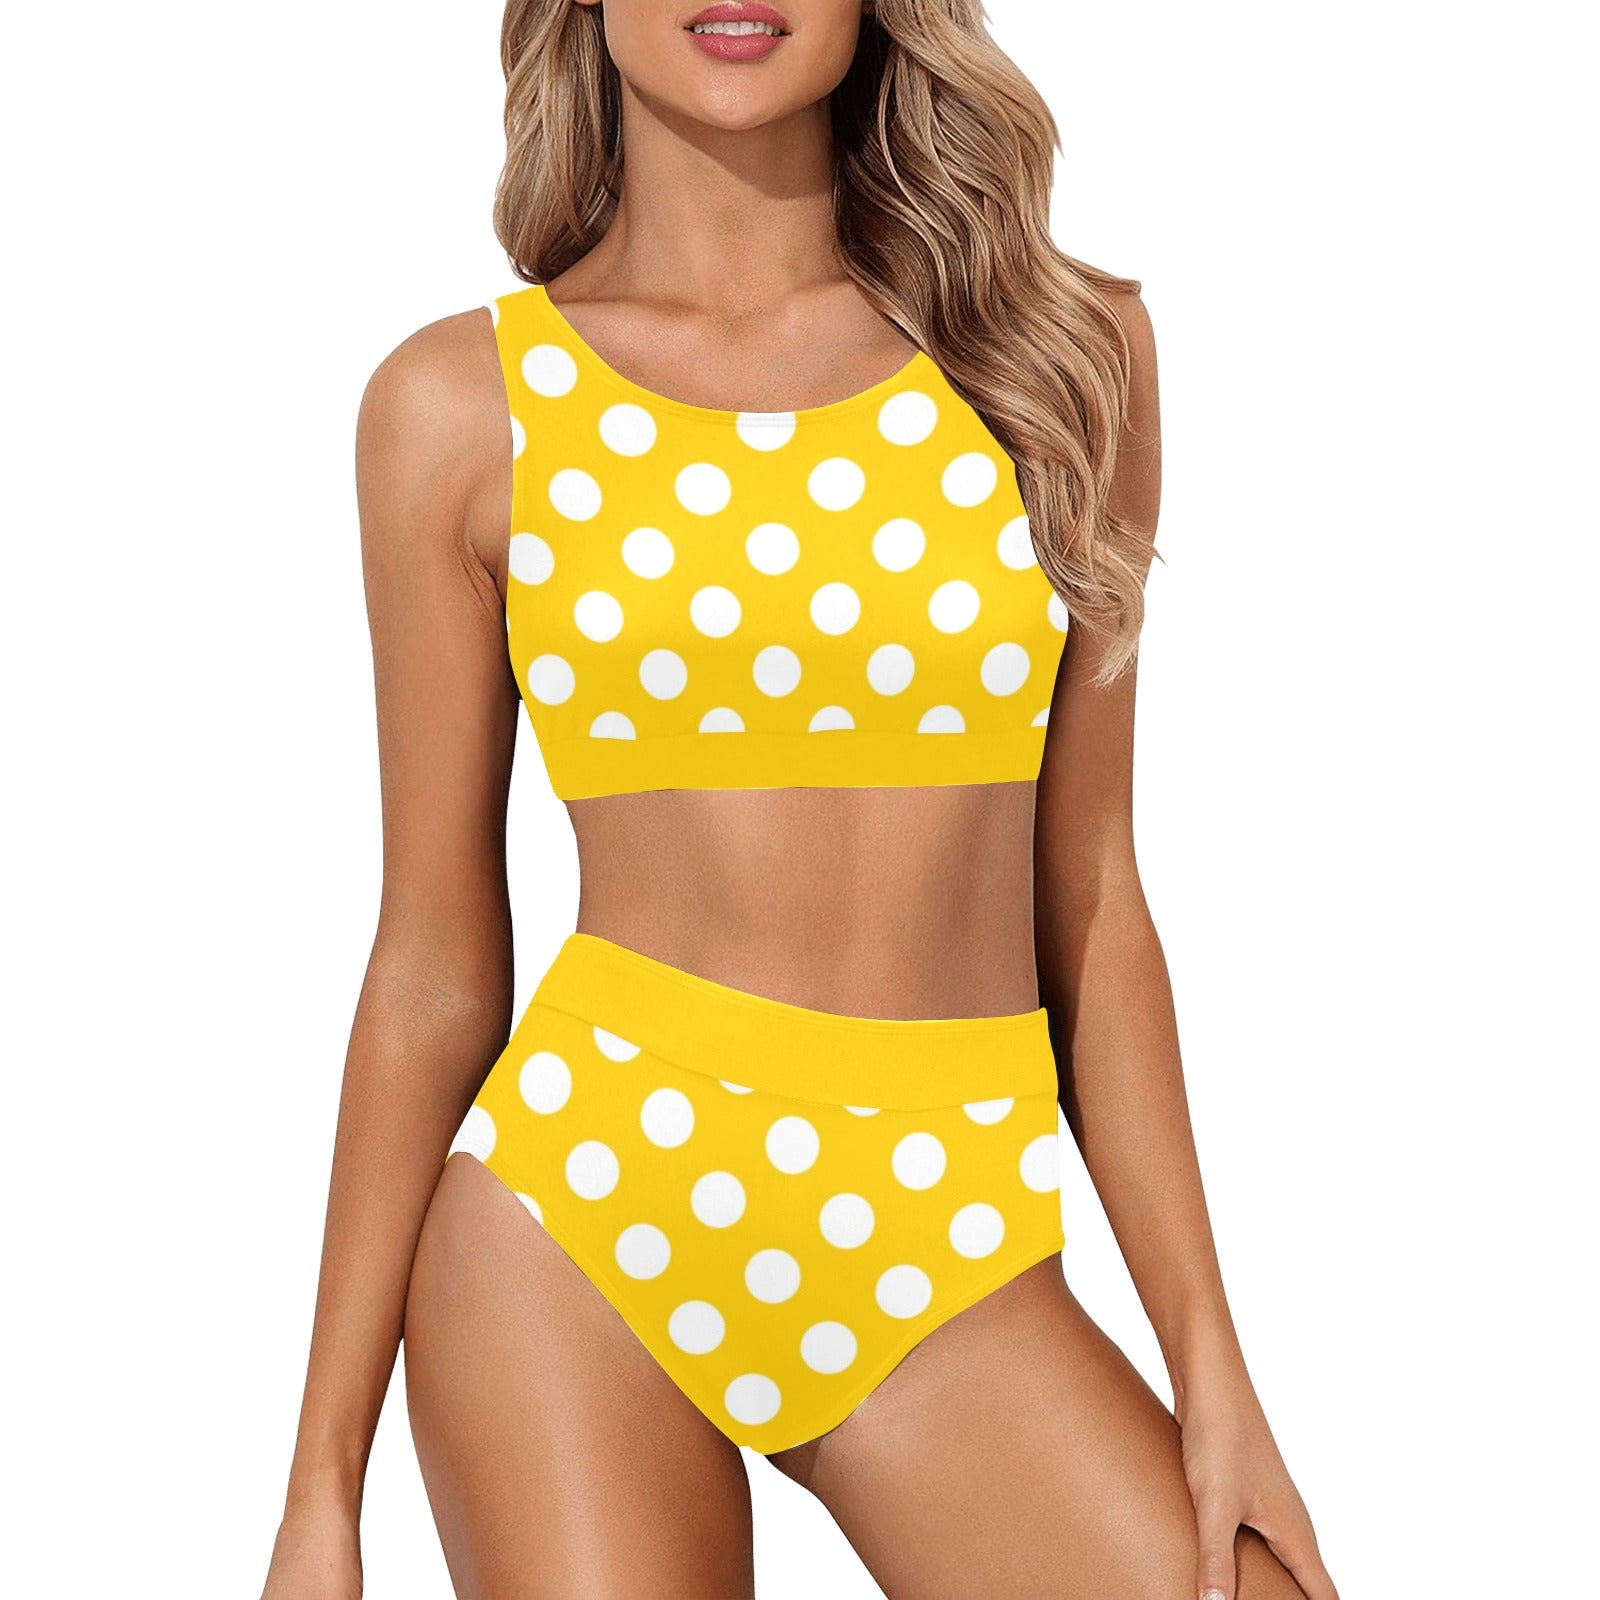 Buy High Waisted Swimsuits for Women Sports Crop Top Bikini Set